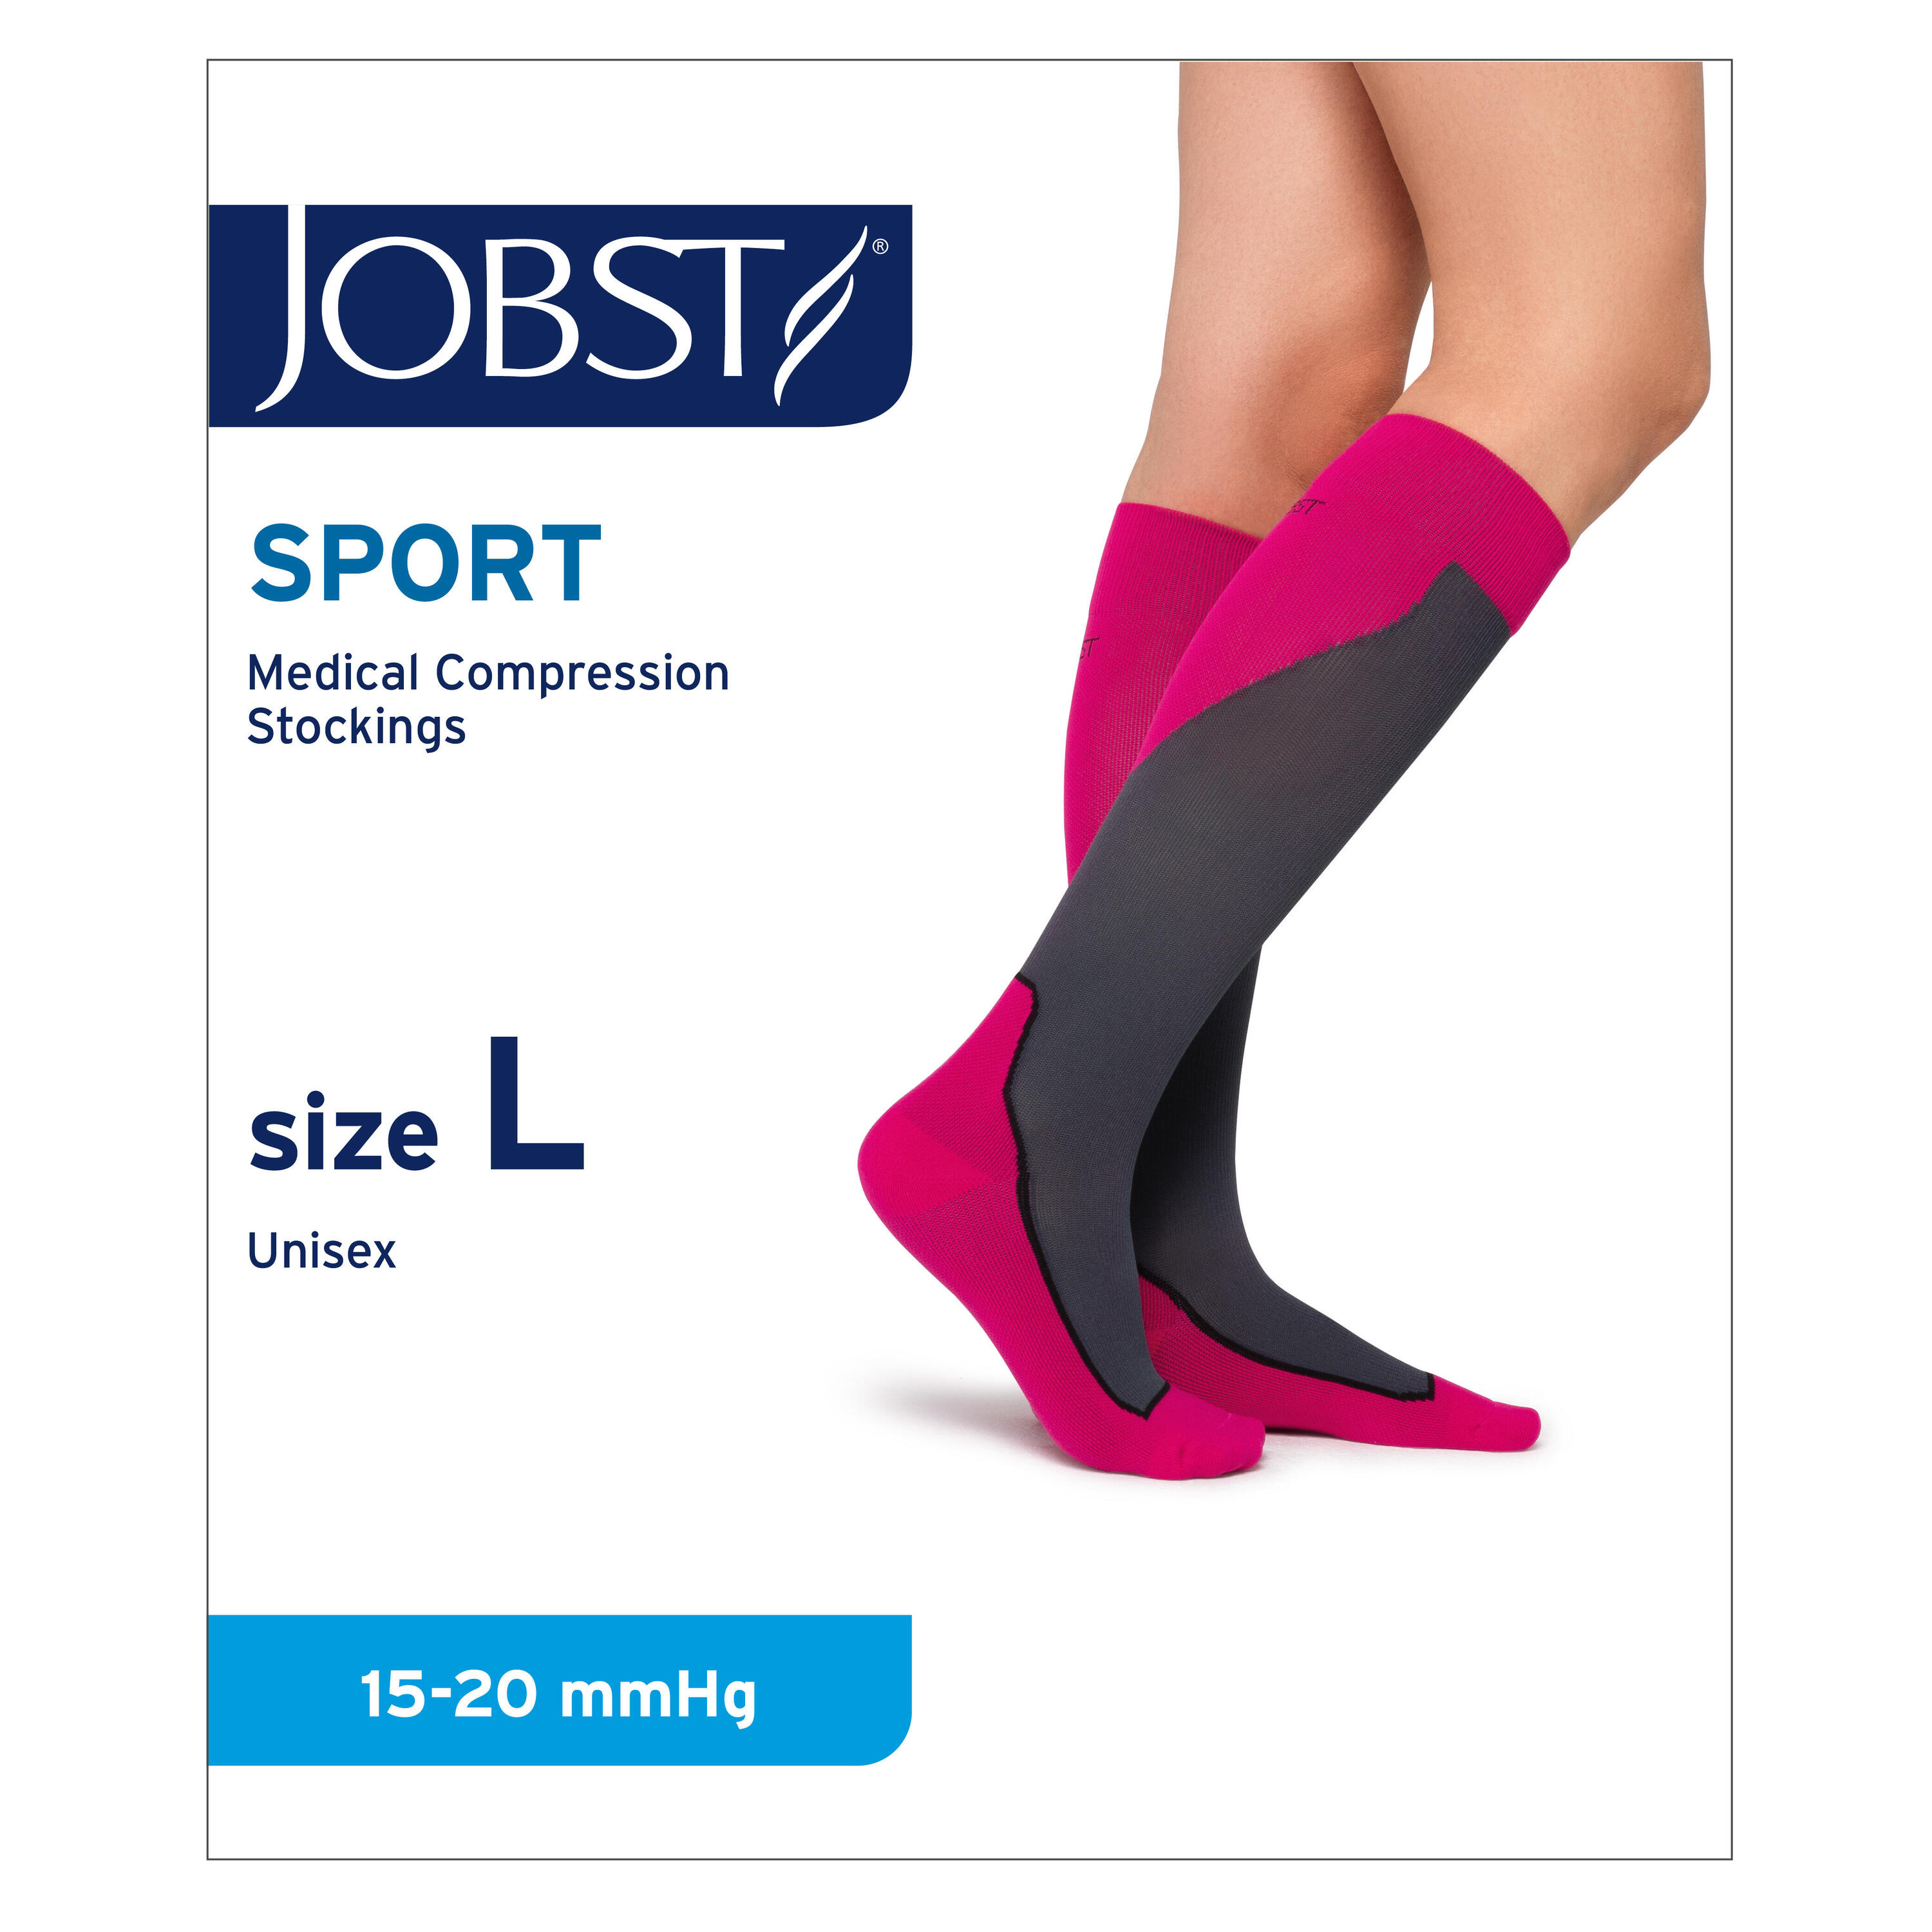 JOBST Unisex Knee High Compression Socks - Large